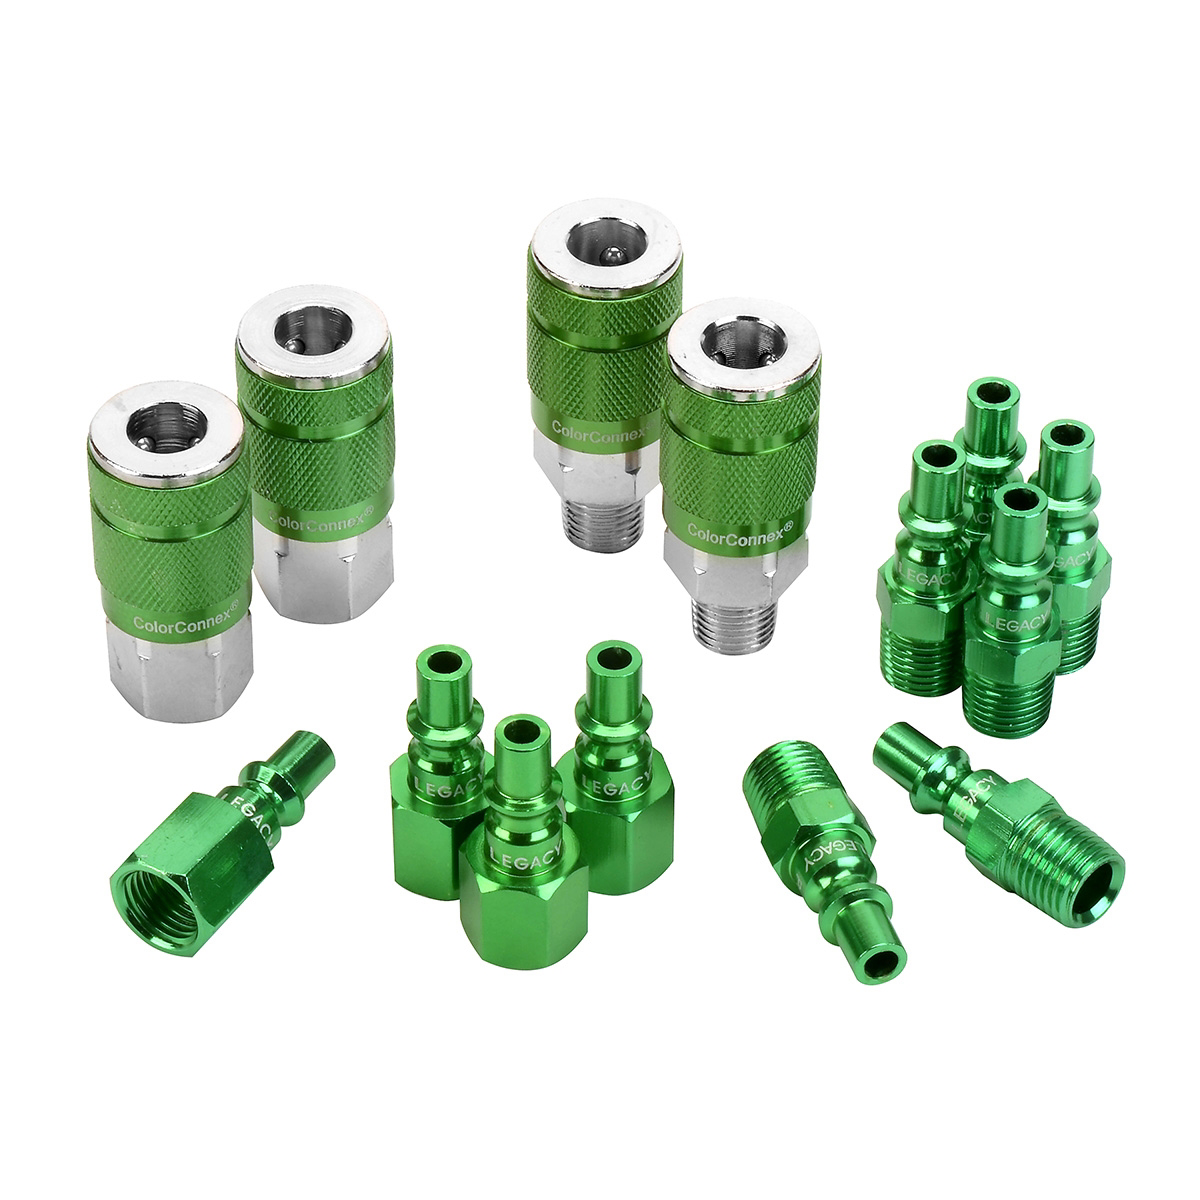 ColorConnex Type B 1/4" Body Coupler & Plug Kit Green 14 Pc